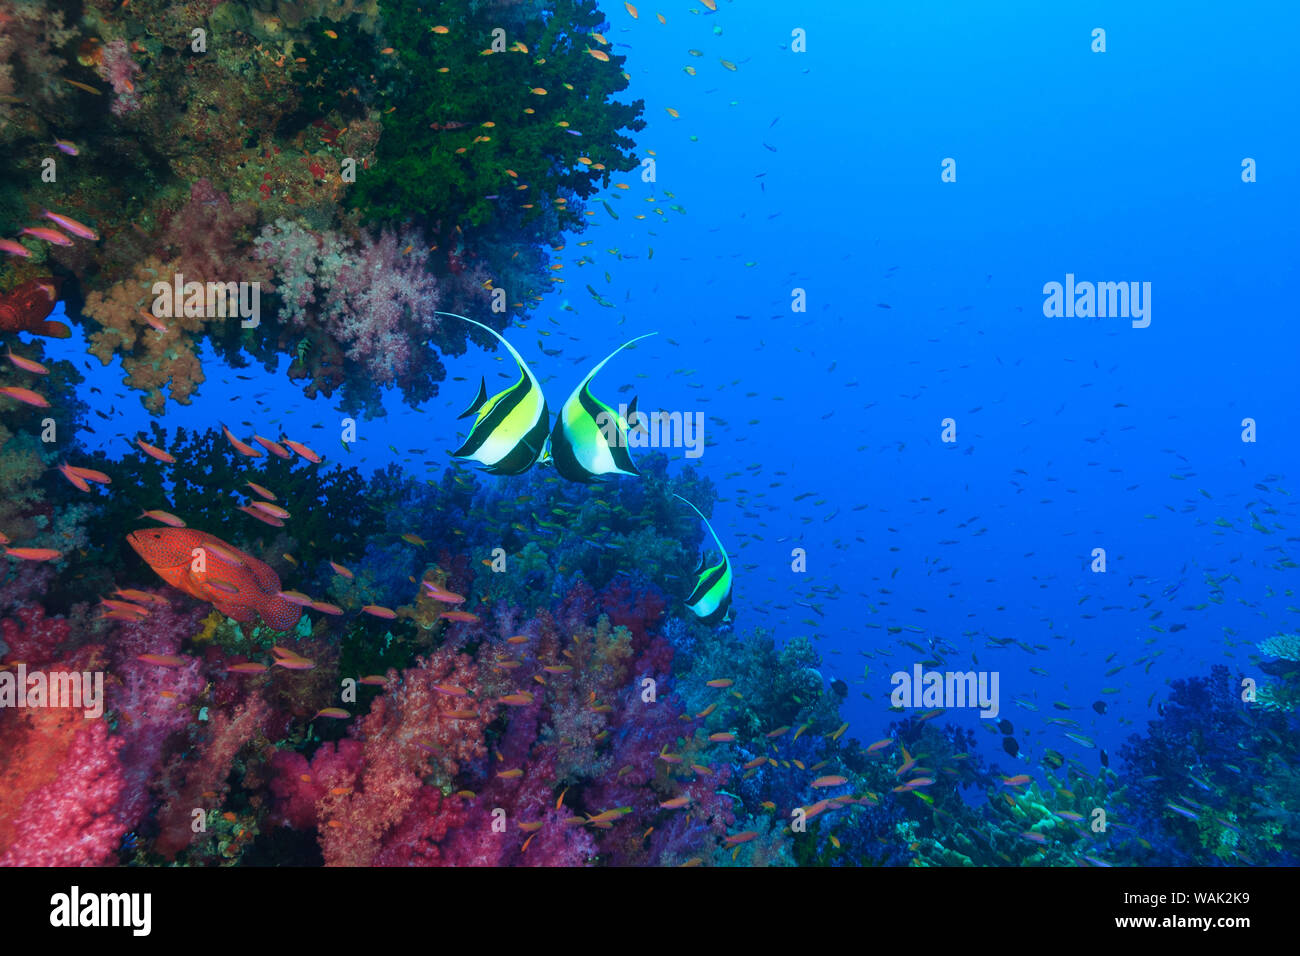 Vibrant and colorful coral reef, Viti Levu, Fiji, South Pacific. Stock Photo